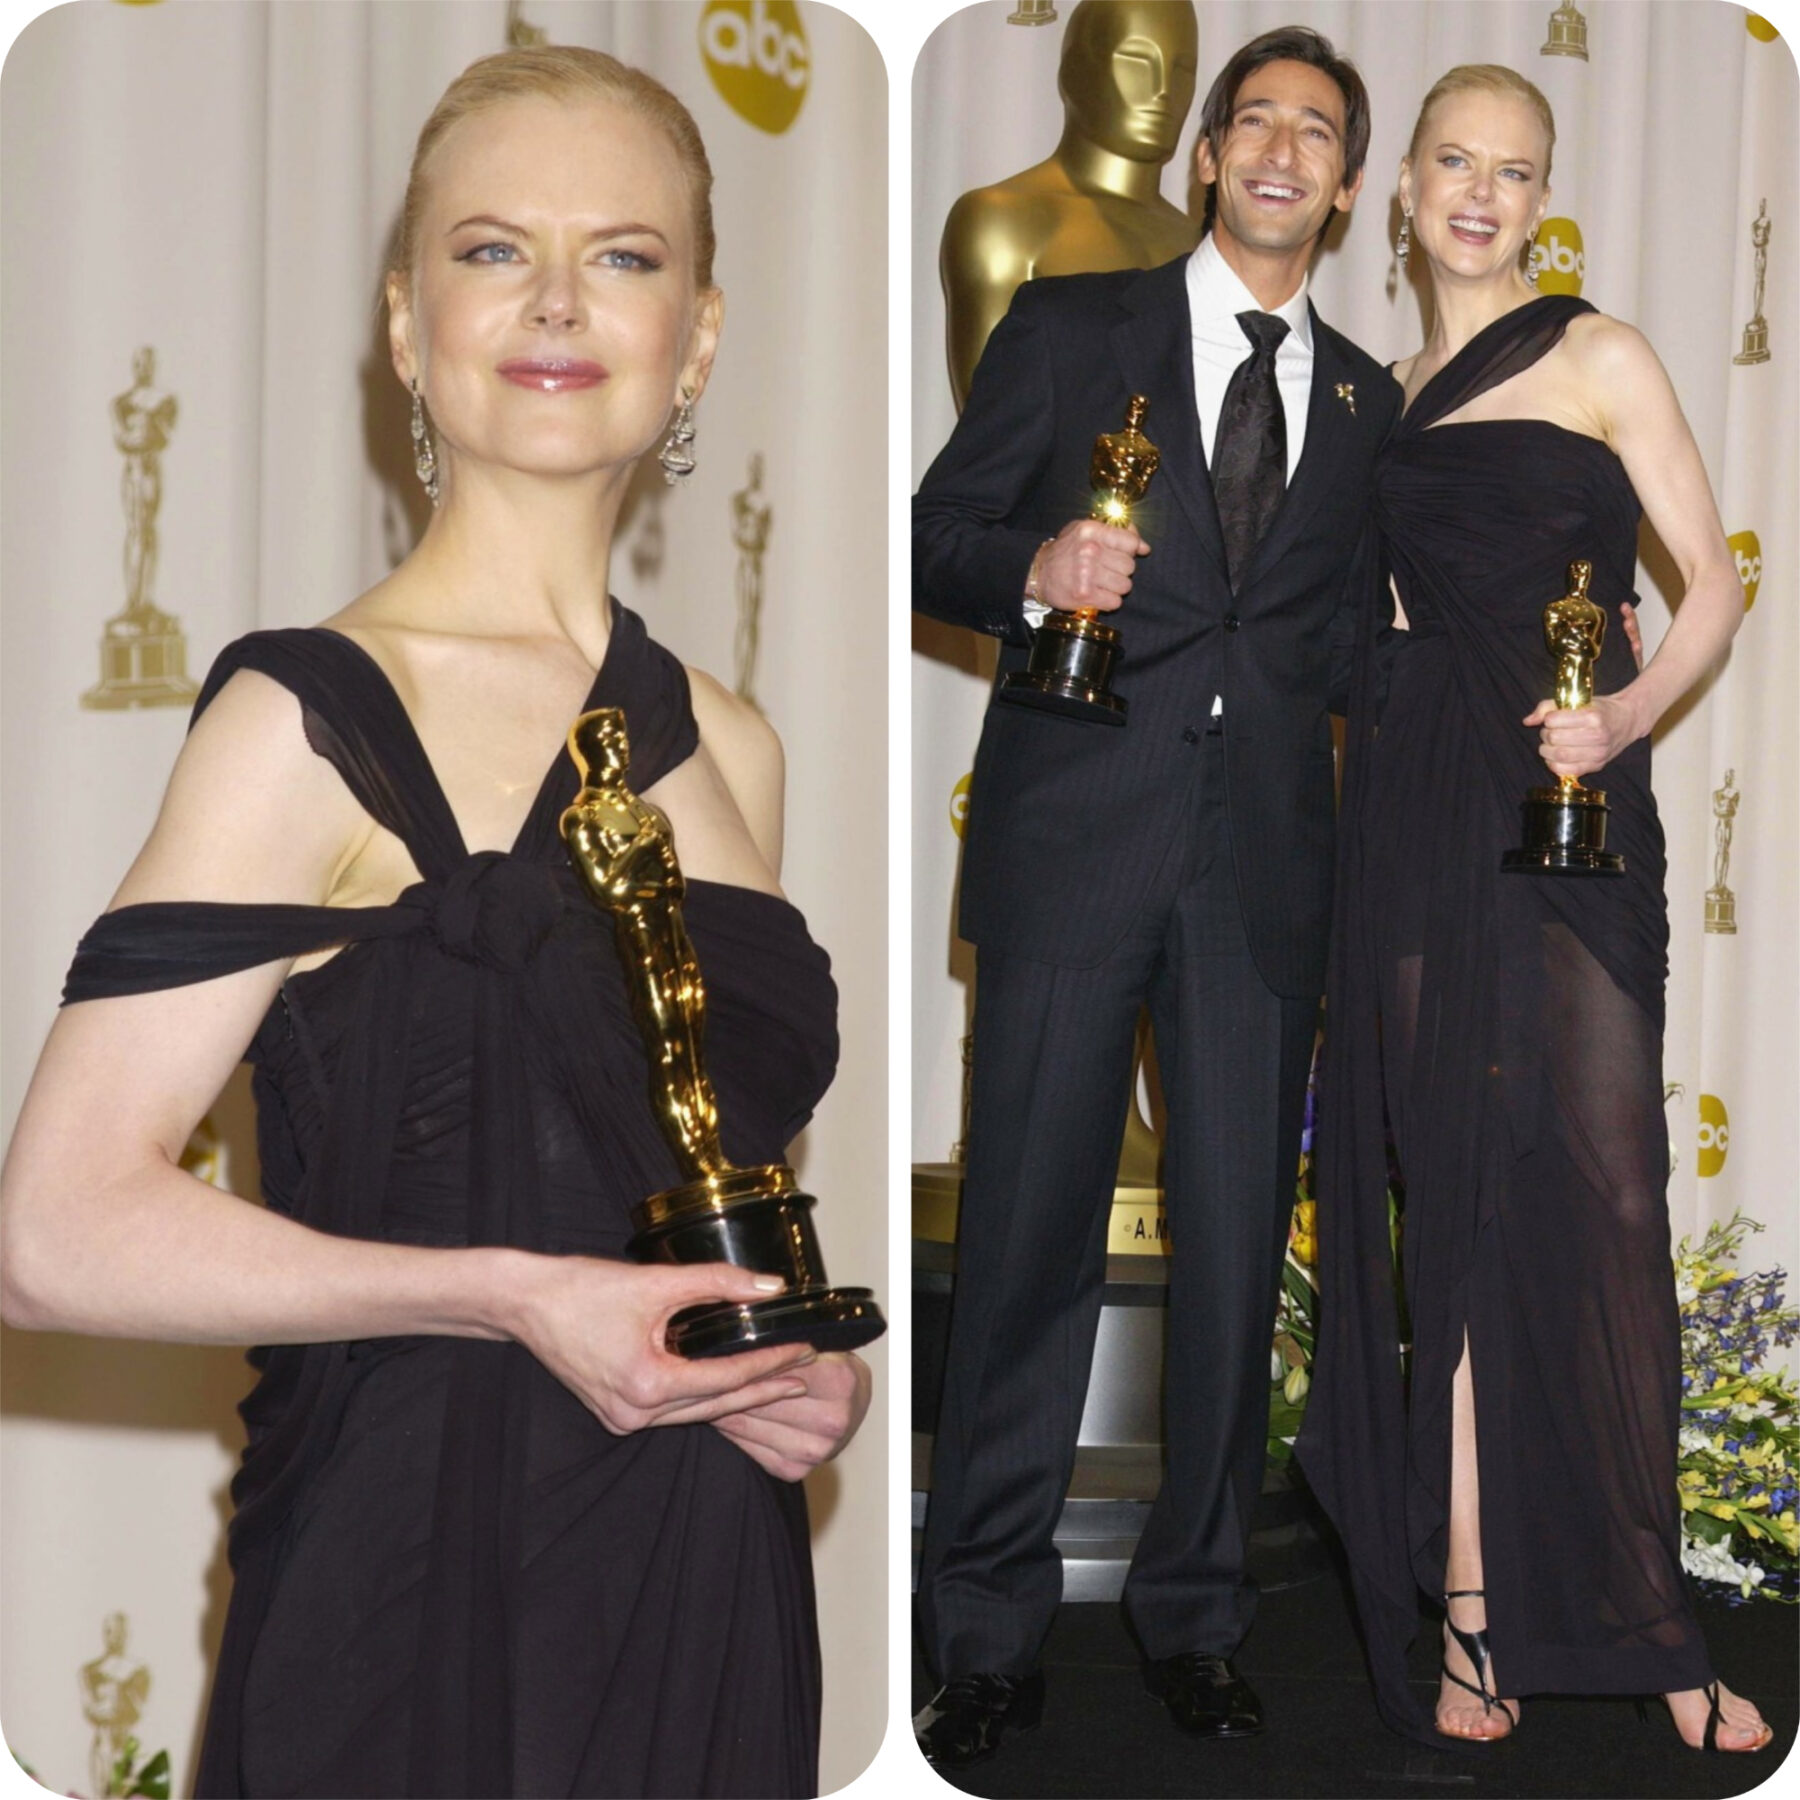 Nicole Kidman's 2003 Oscar win